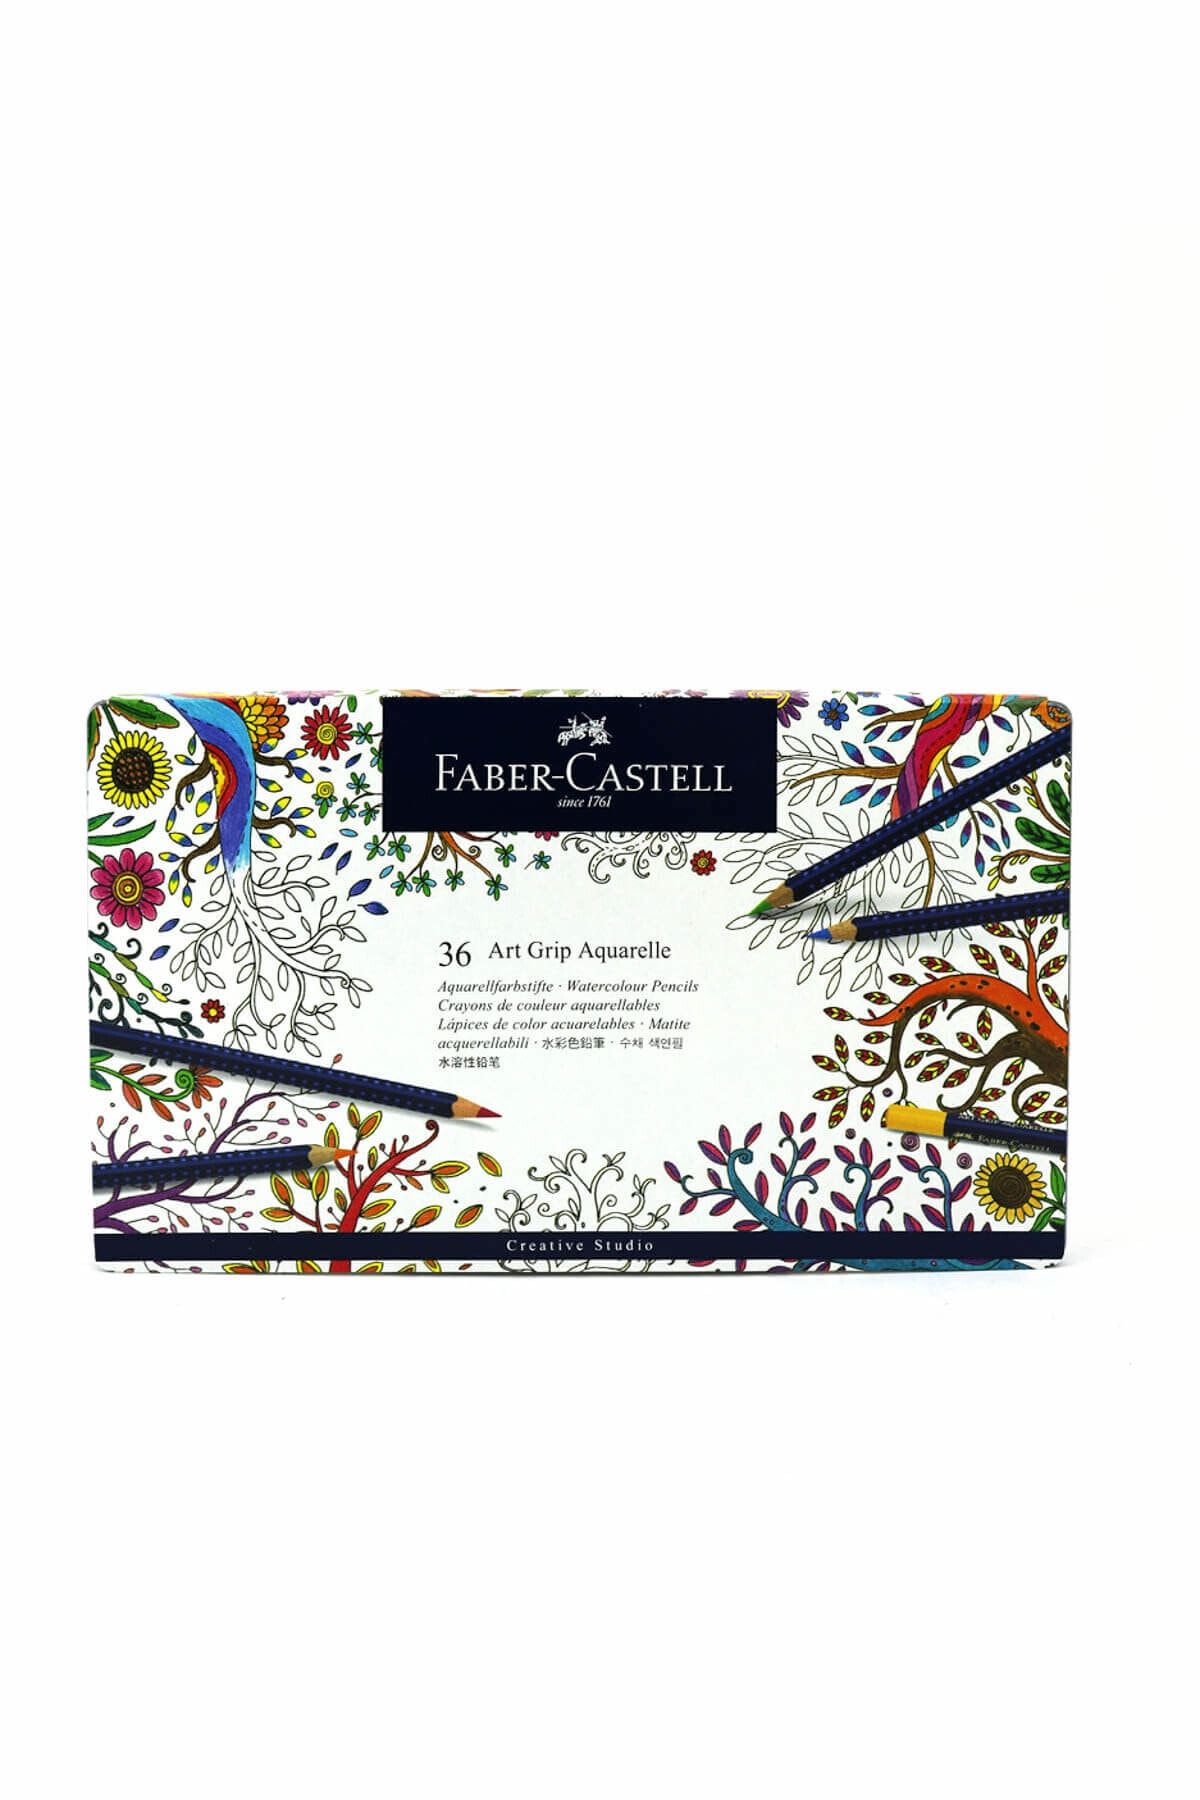 Faber Castell ART GRIP 36 RENK AQUARELL BOYA KALEMİ 114236